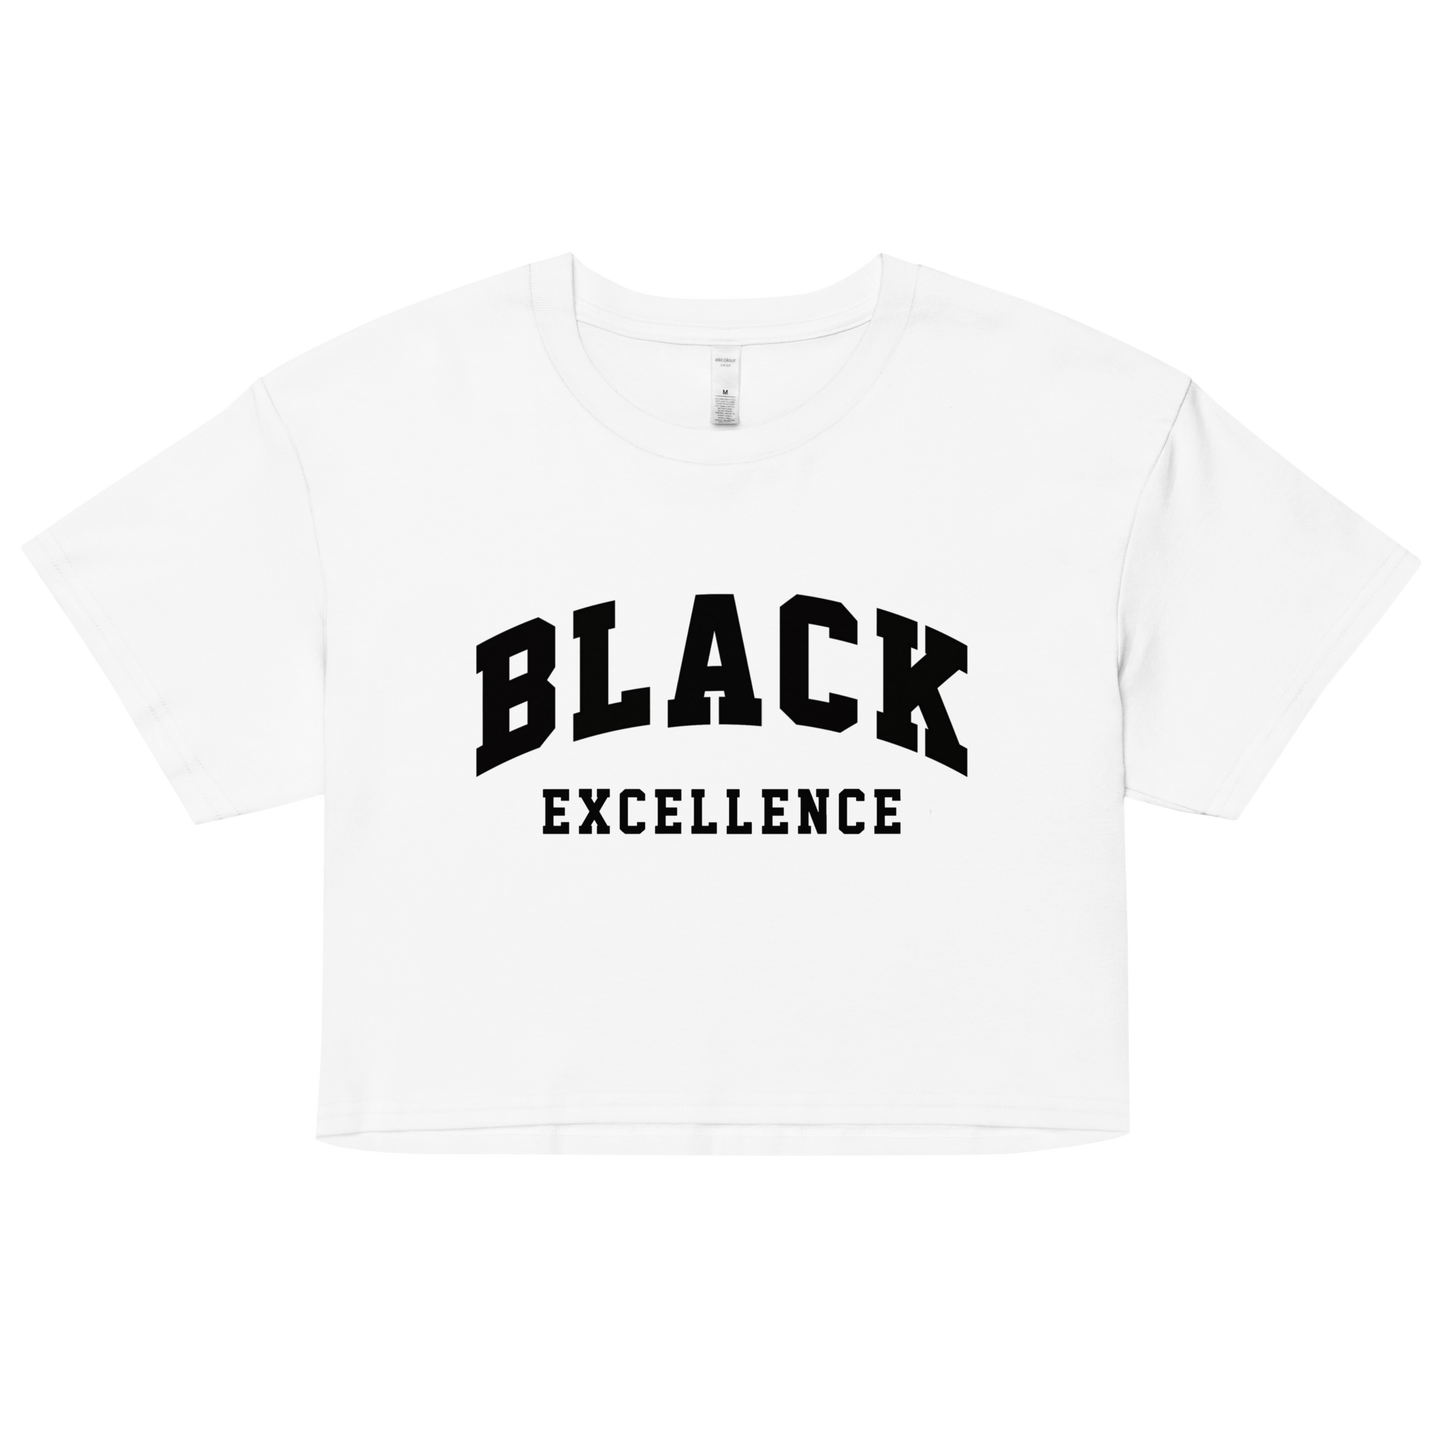 Black Excellence Crop Top